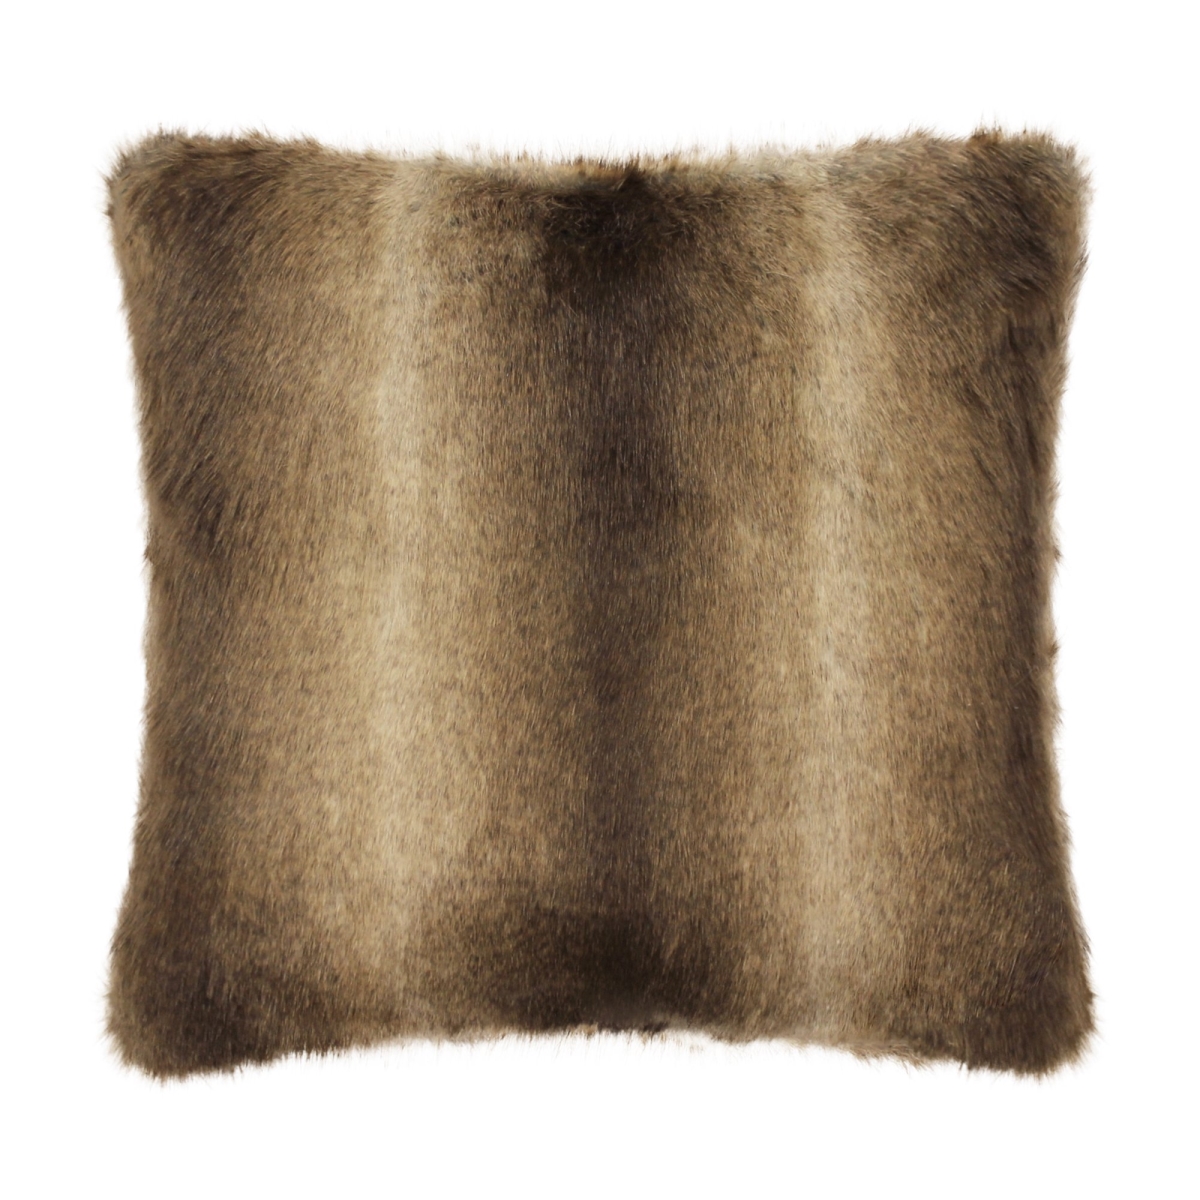 Sq-pi-brwff-1818 18 X 18 In. Wolf Faux Fur Decorative Cushion, Brown - 100 Percent Polyester